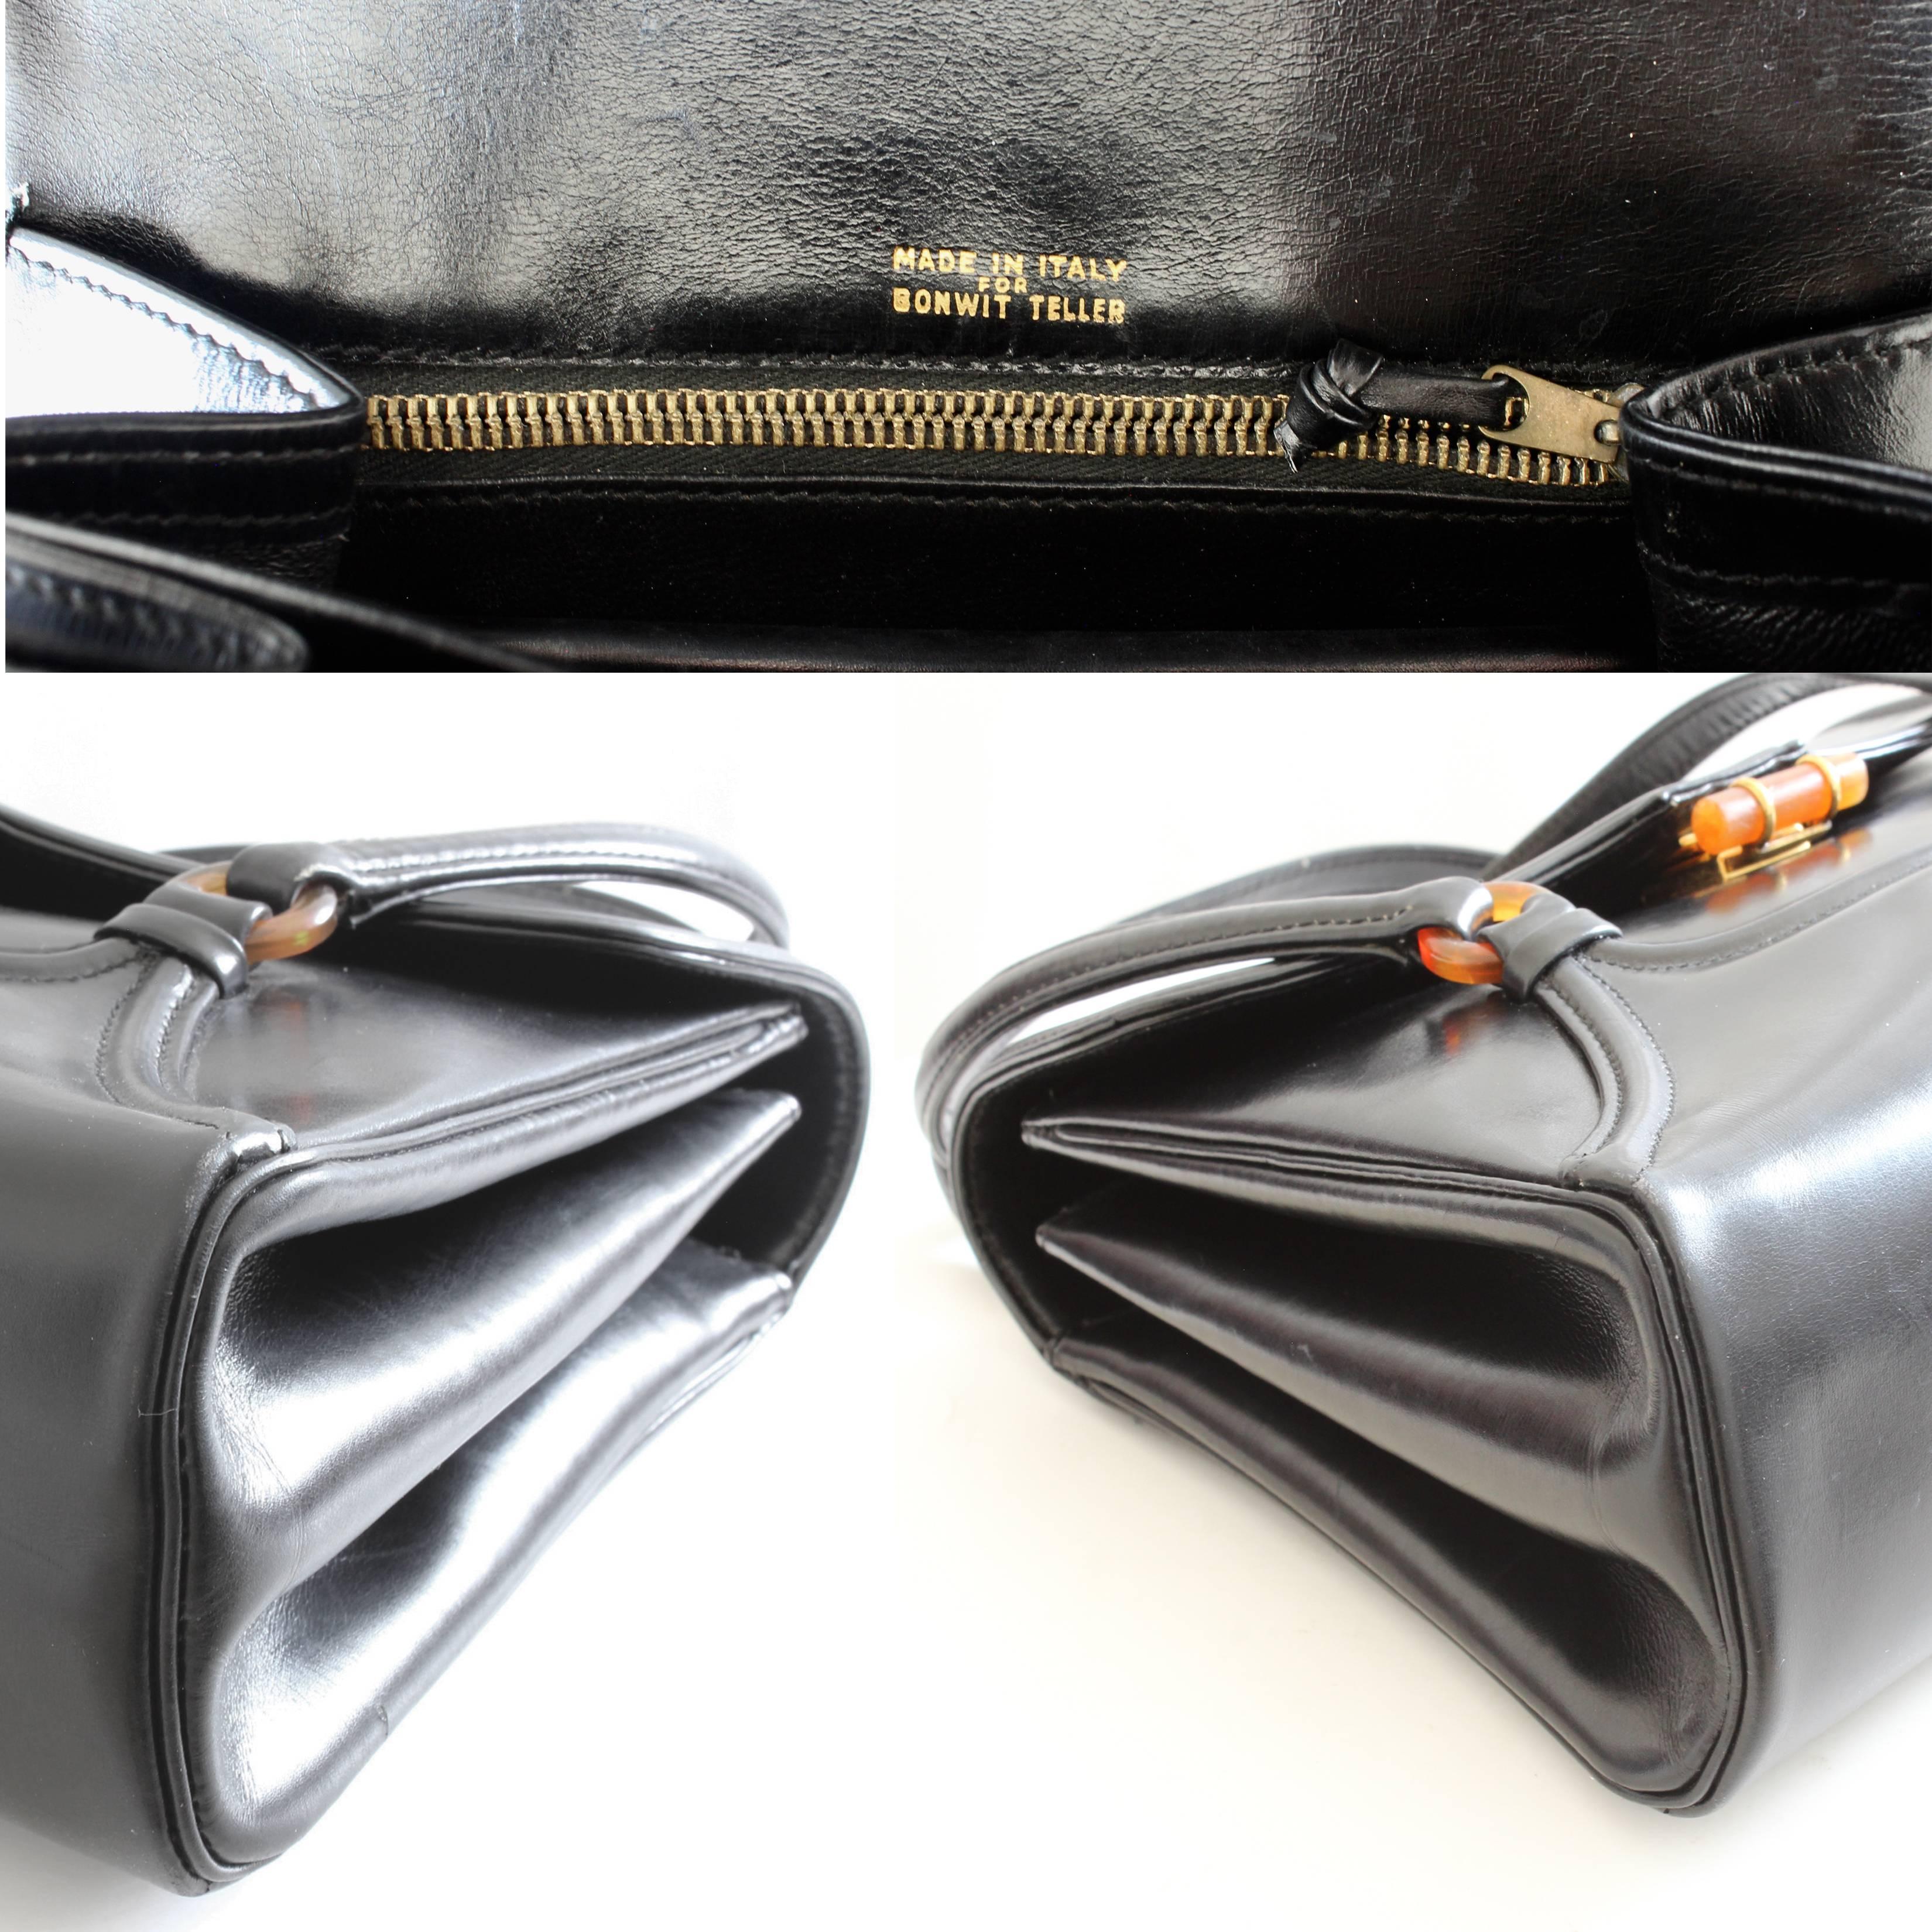 Bonwit Teller Leather Handbag with Bakelite Hardware Vintage 60s Made in Italy 4